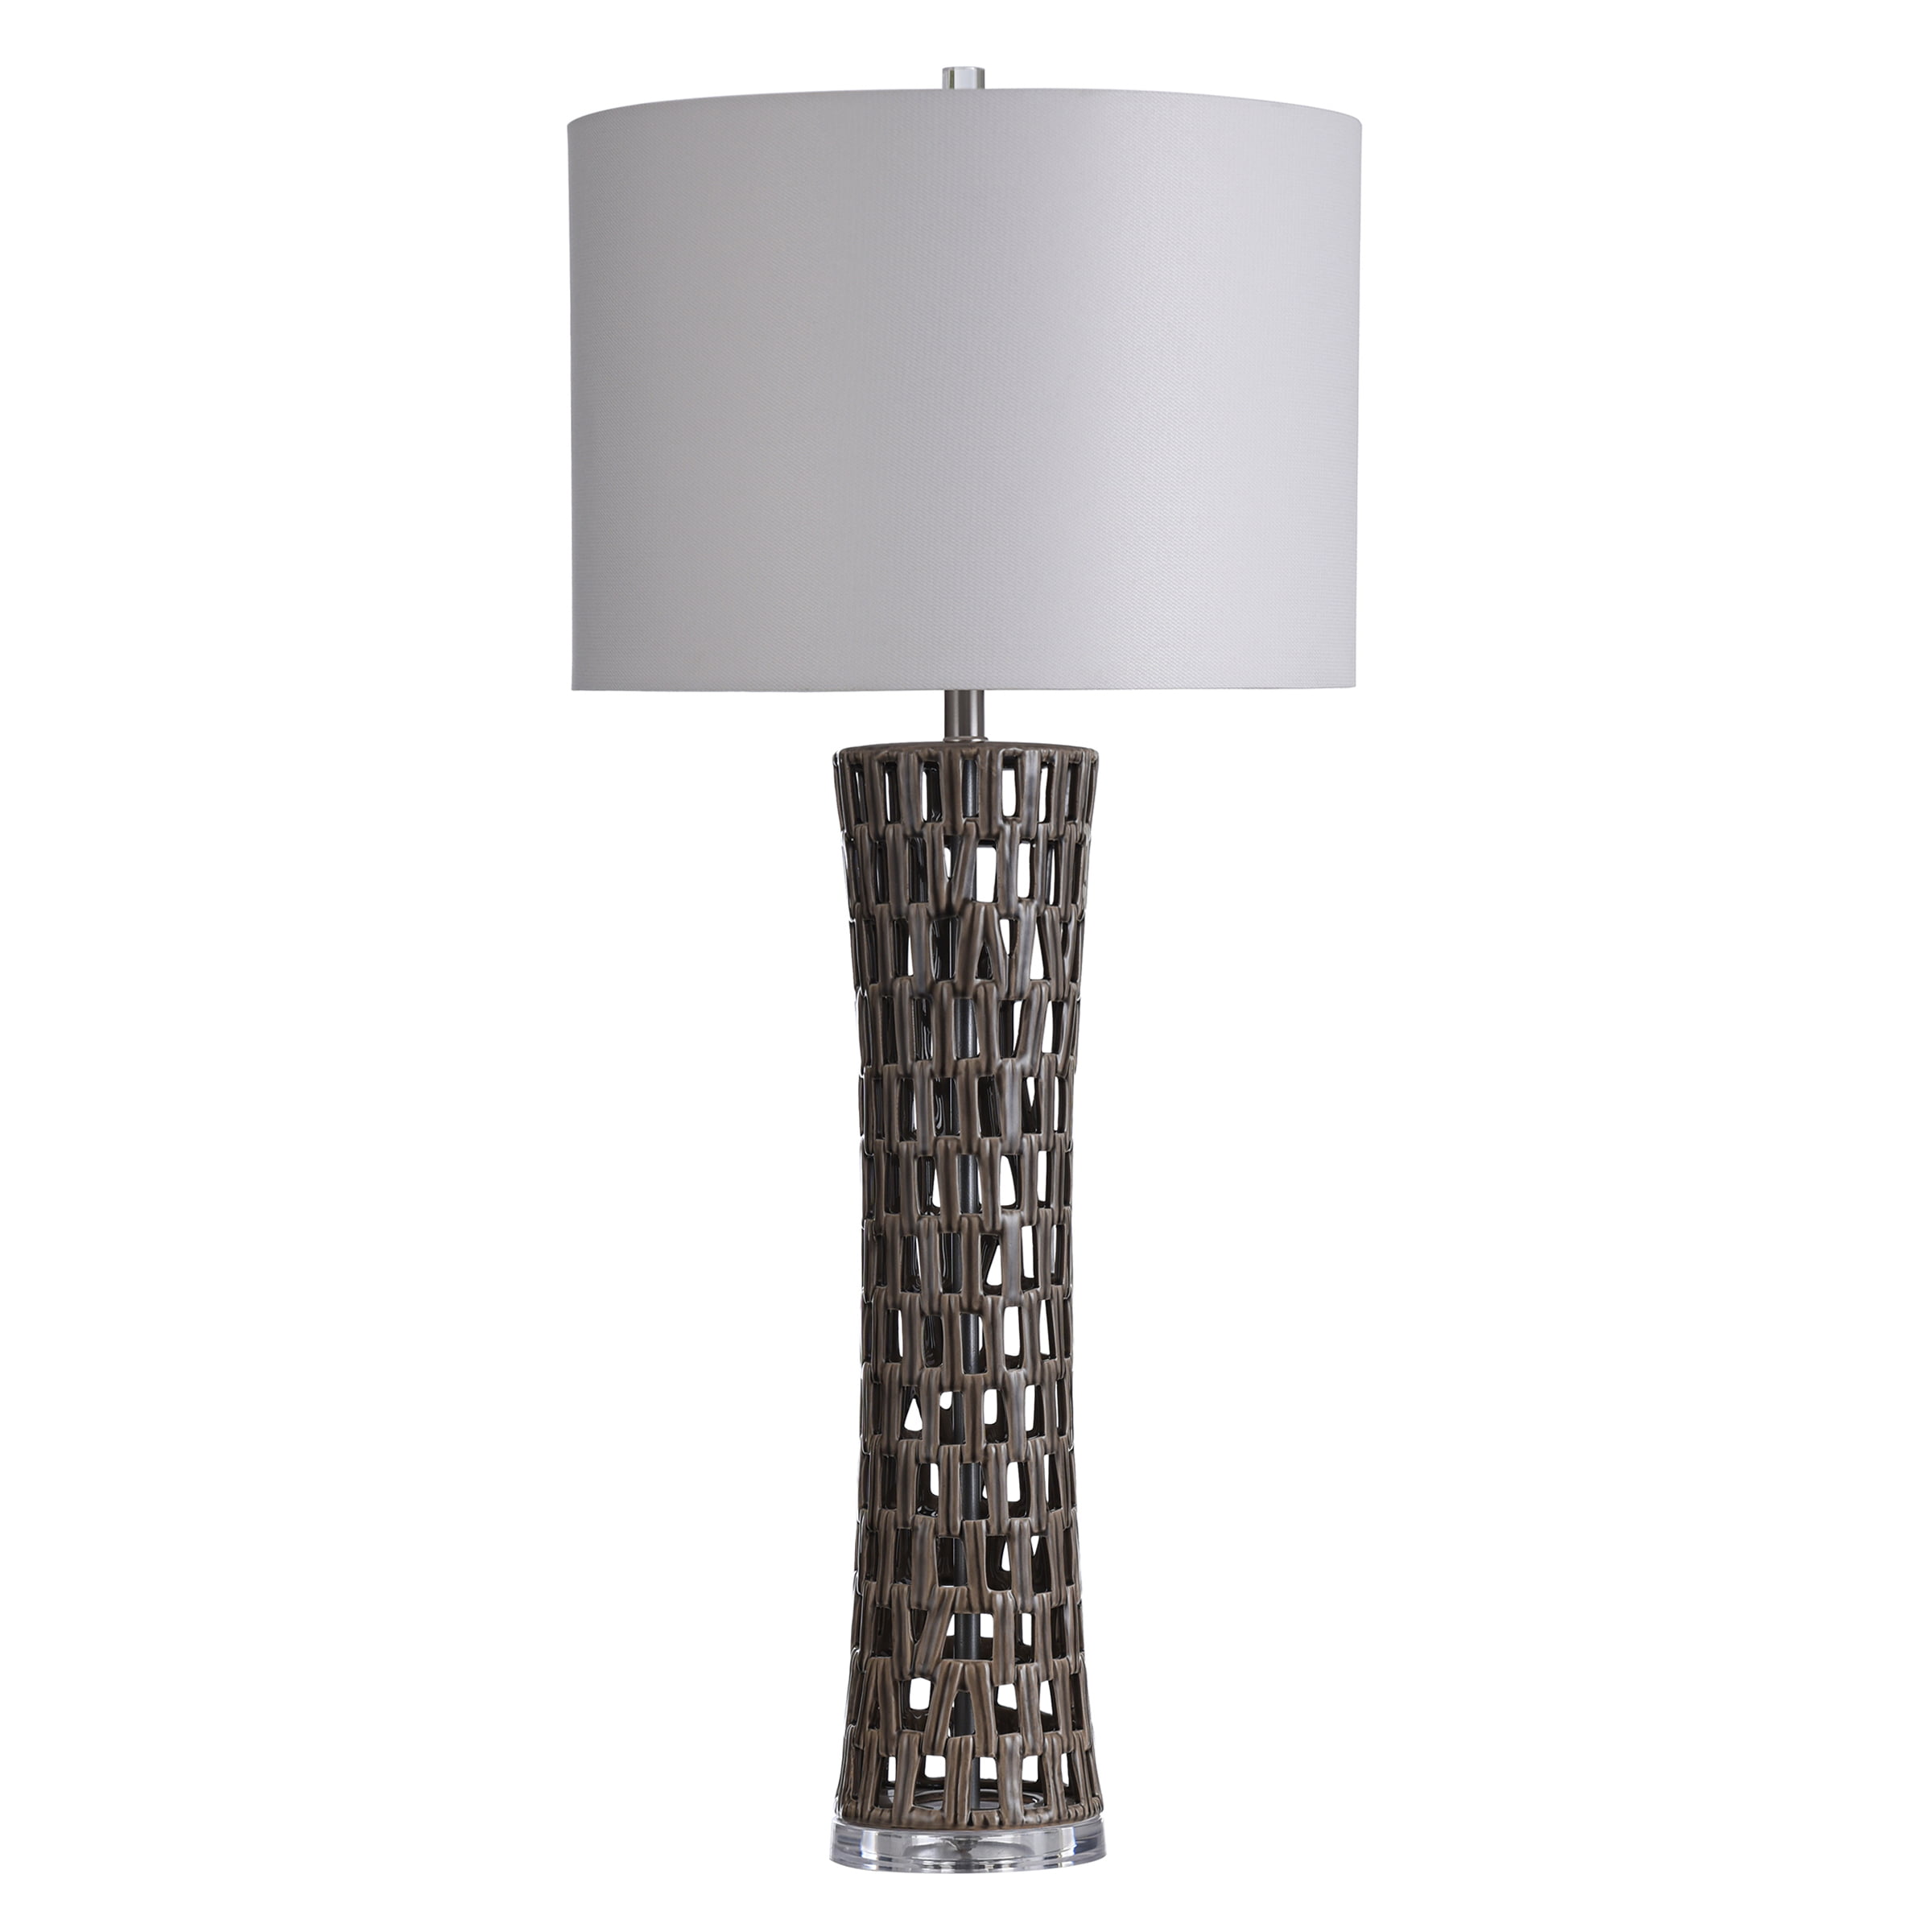 Ceramic Column Table Lamp, Acrylic Column Table Lamp Usb C